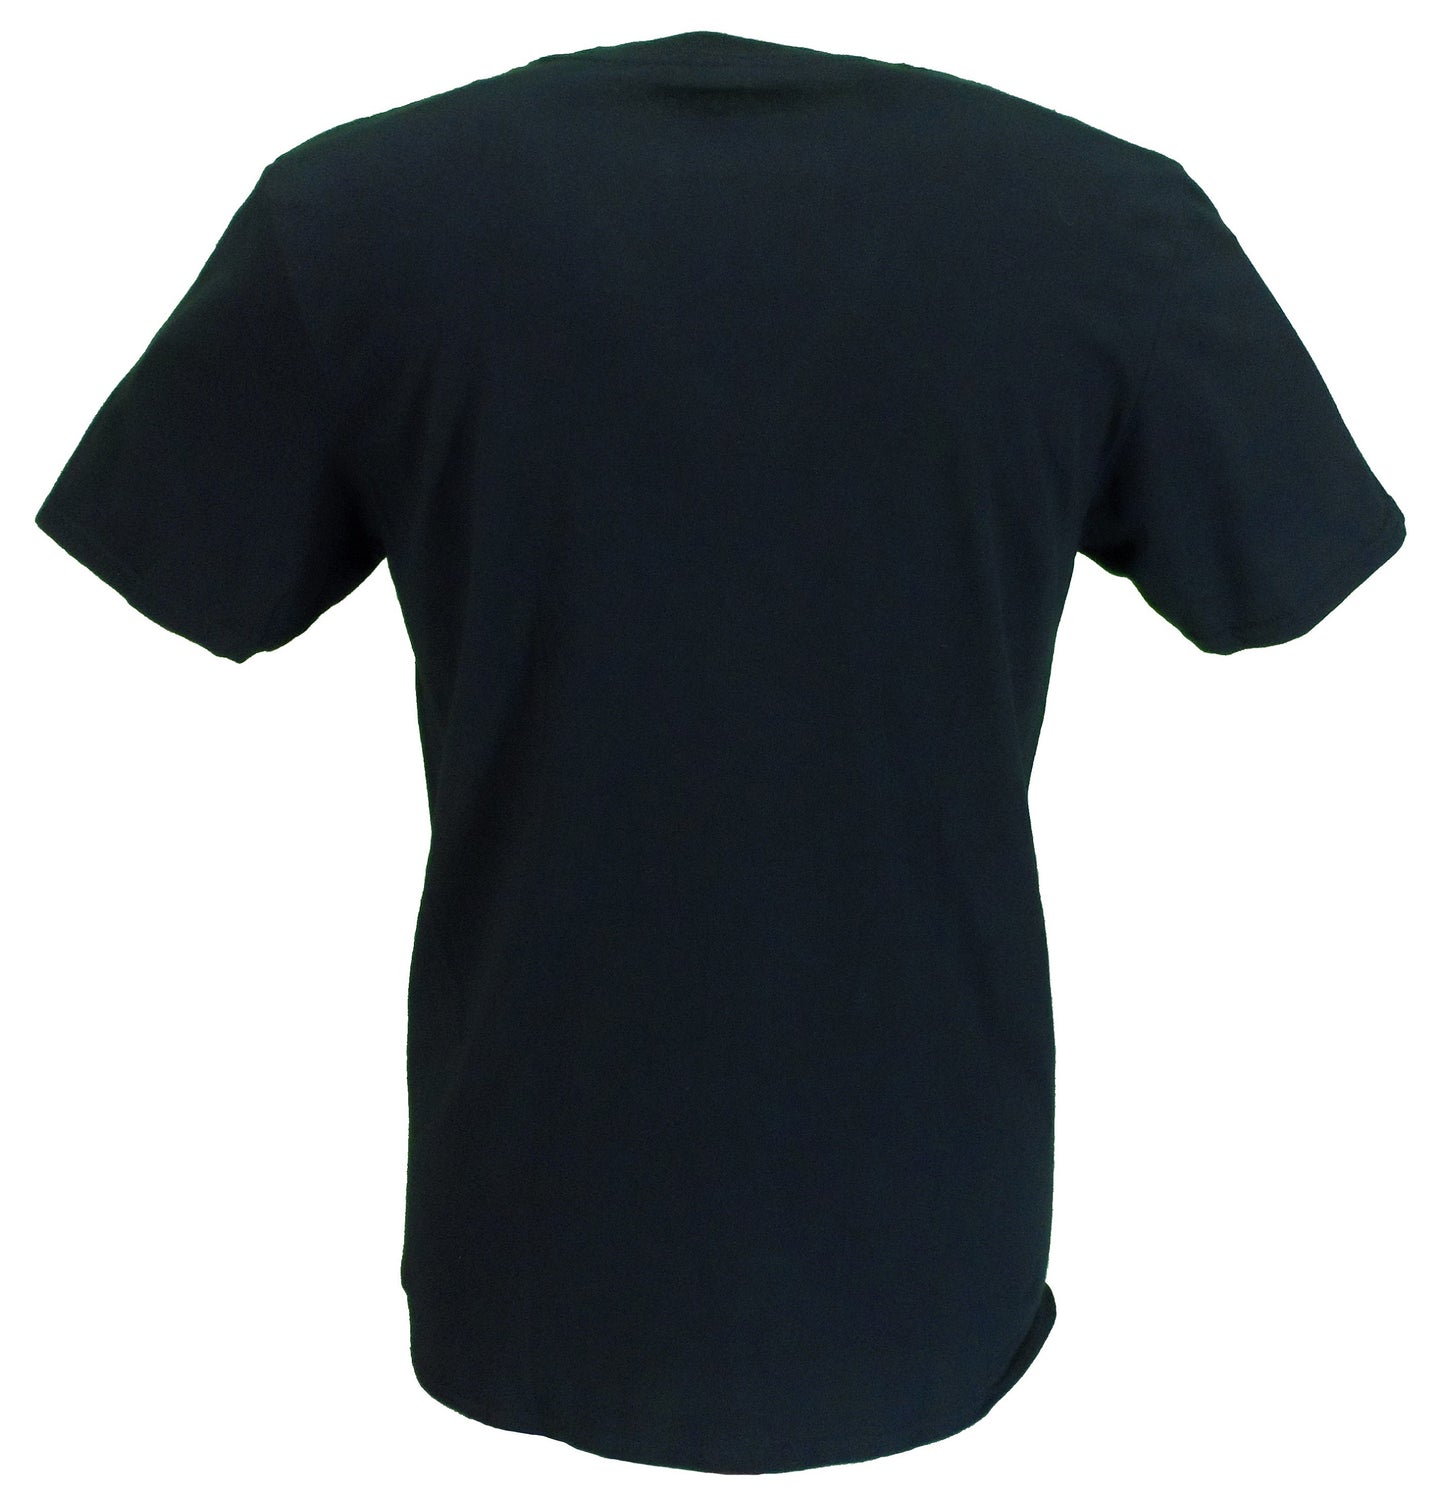 Schwarzes offizielles Pil Public Image Limited Logo-T-Shirt für Herren